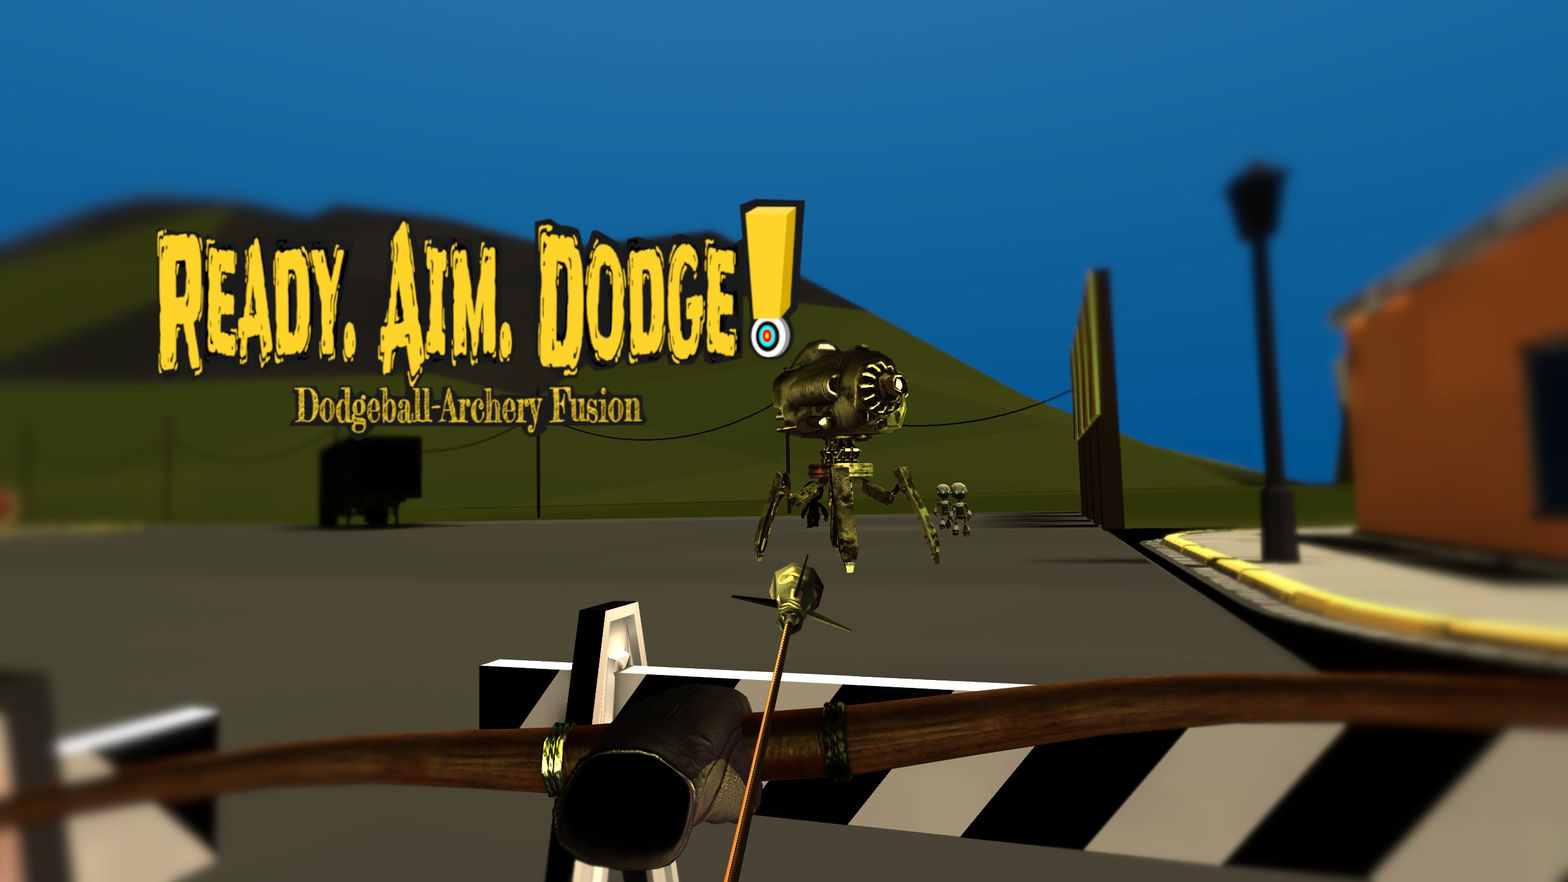 Ready. Aim. Dodge! Dodgeball-Archery Fusion